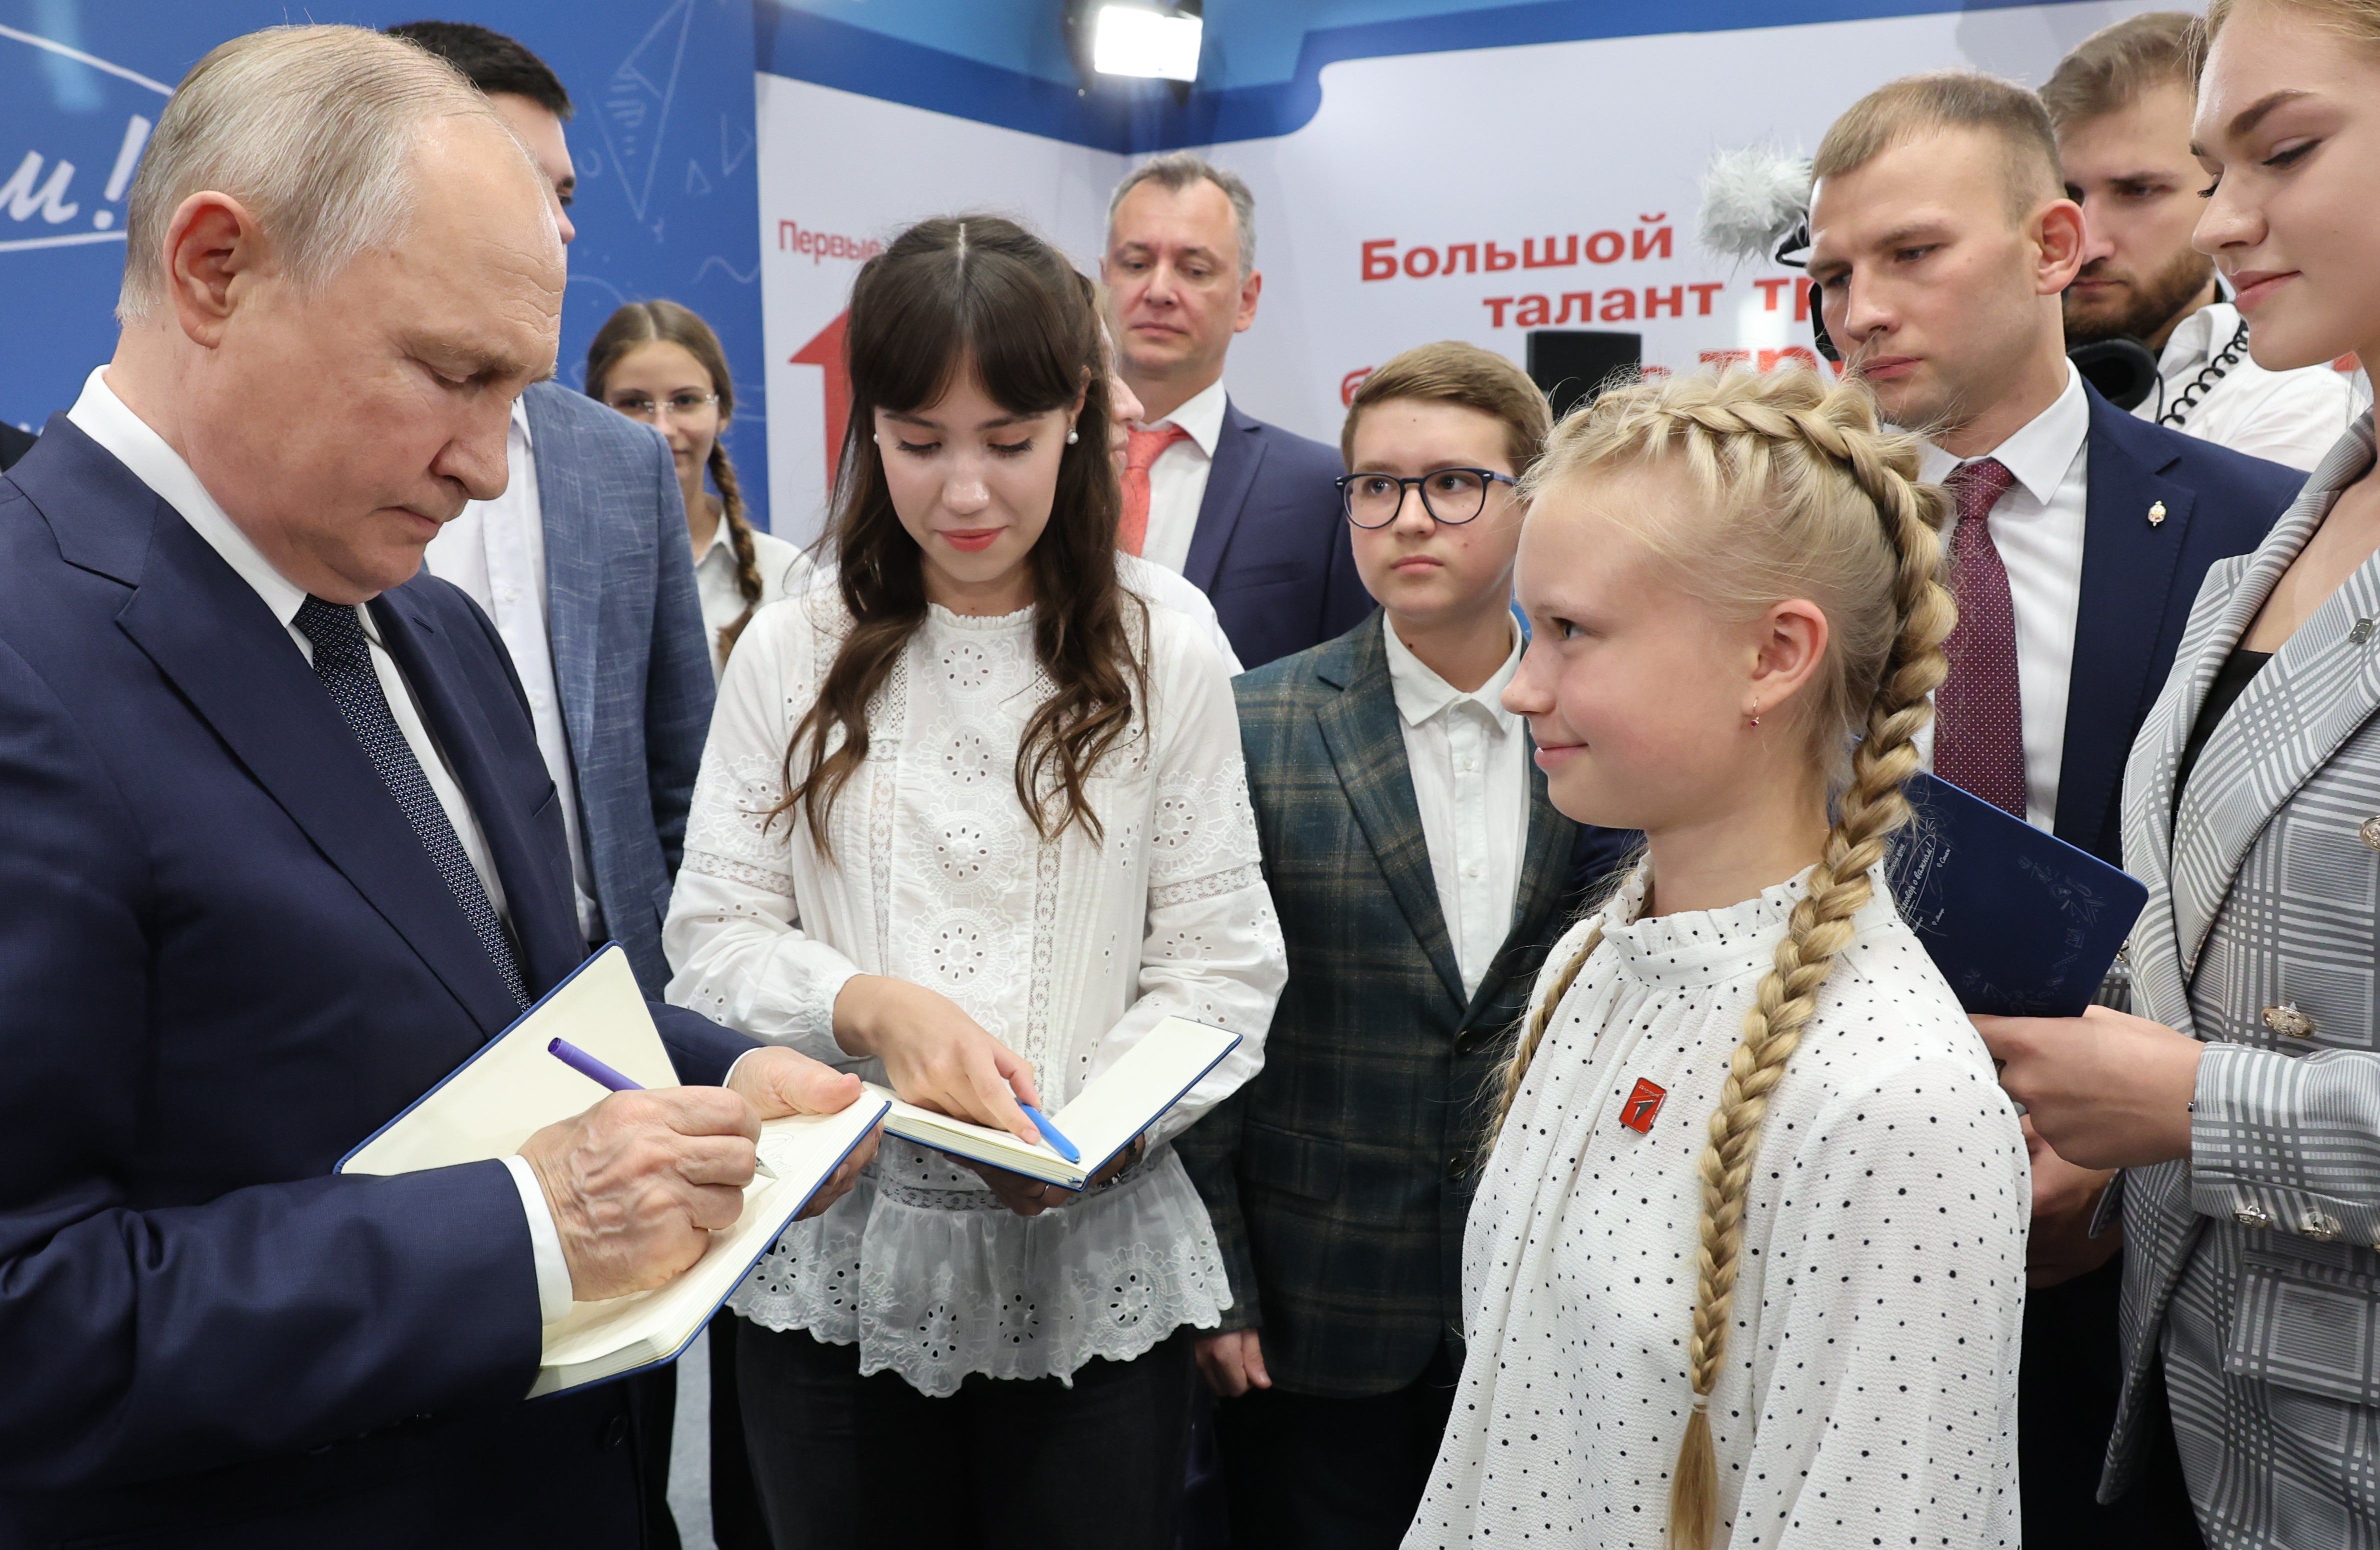 Russian president Vladimir Putin signs autographs for schoolchildren earlier this month